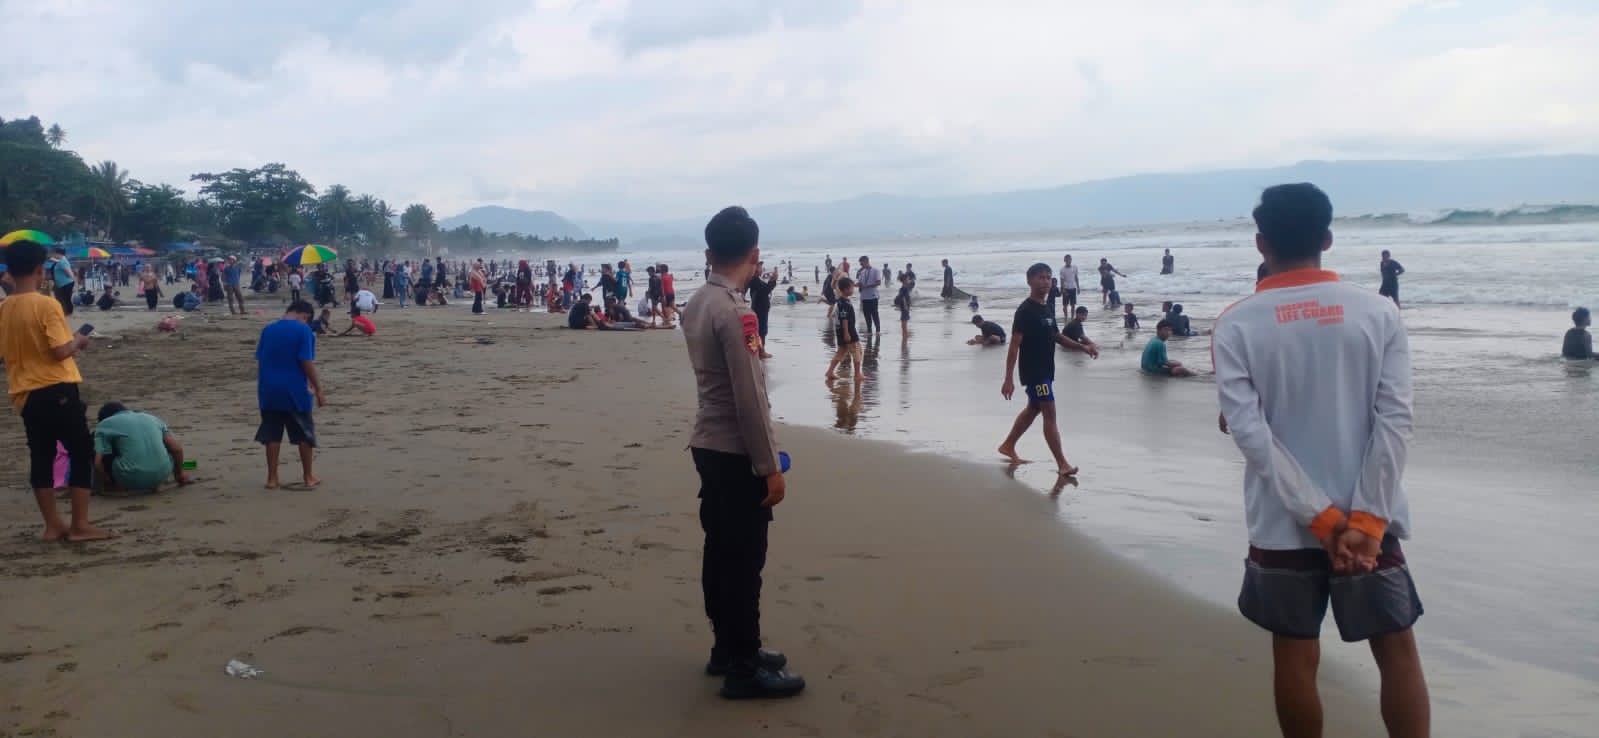 MENINJAU : Personel polairud polres Sukabumi saat meninjau pengawasan wisatawan di pantai. (FOTO : NANDI/RADARSUKABUMI)